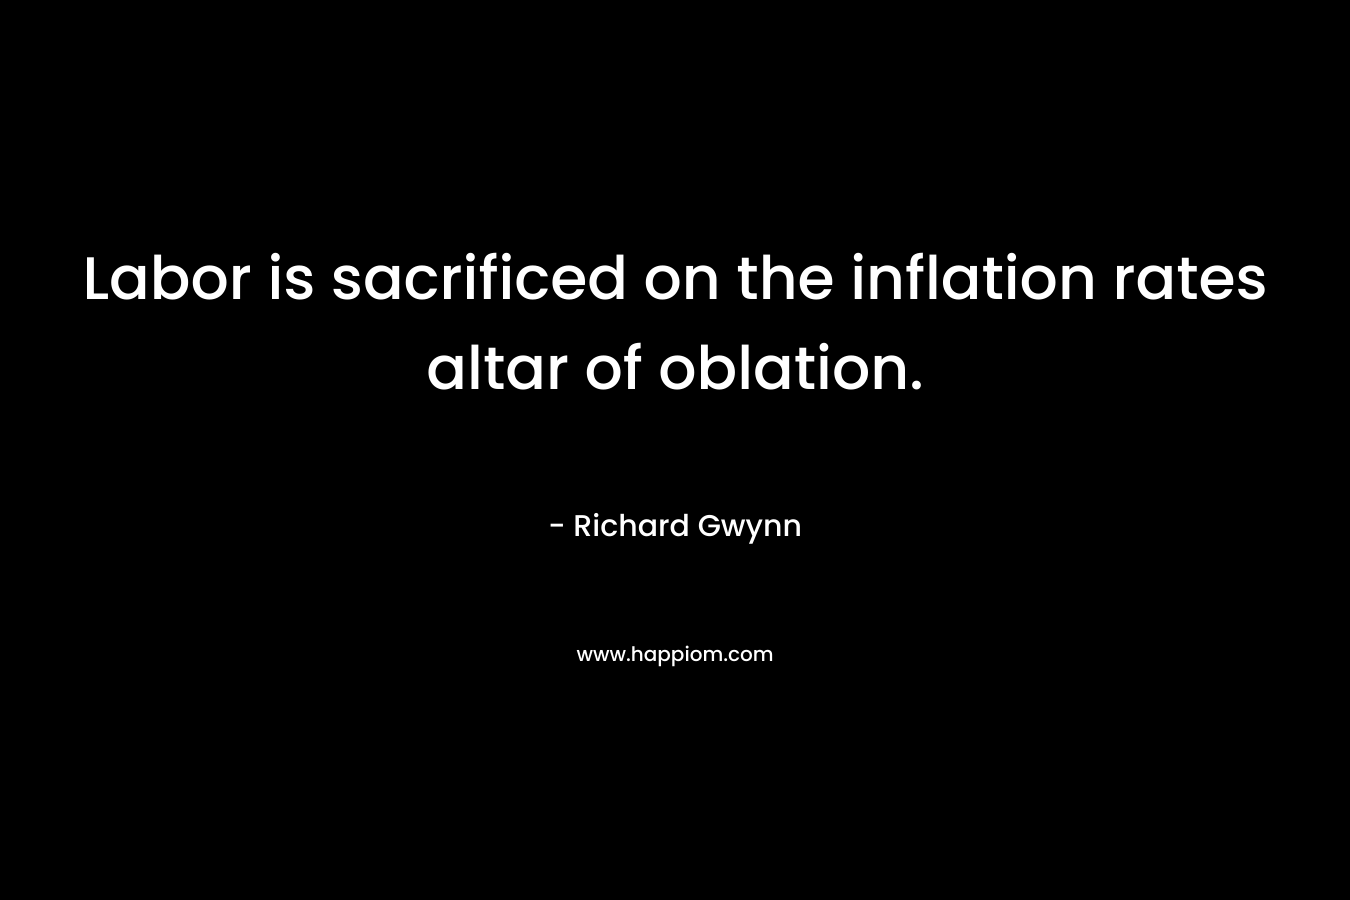 Labor is sacrificed on the inflation rates altar of oblation. – Richard Gwynn